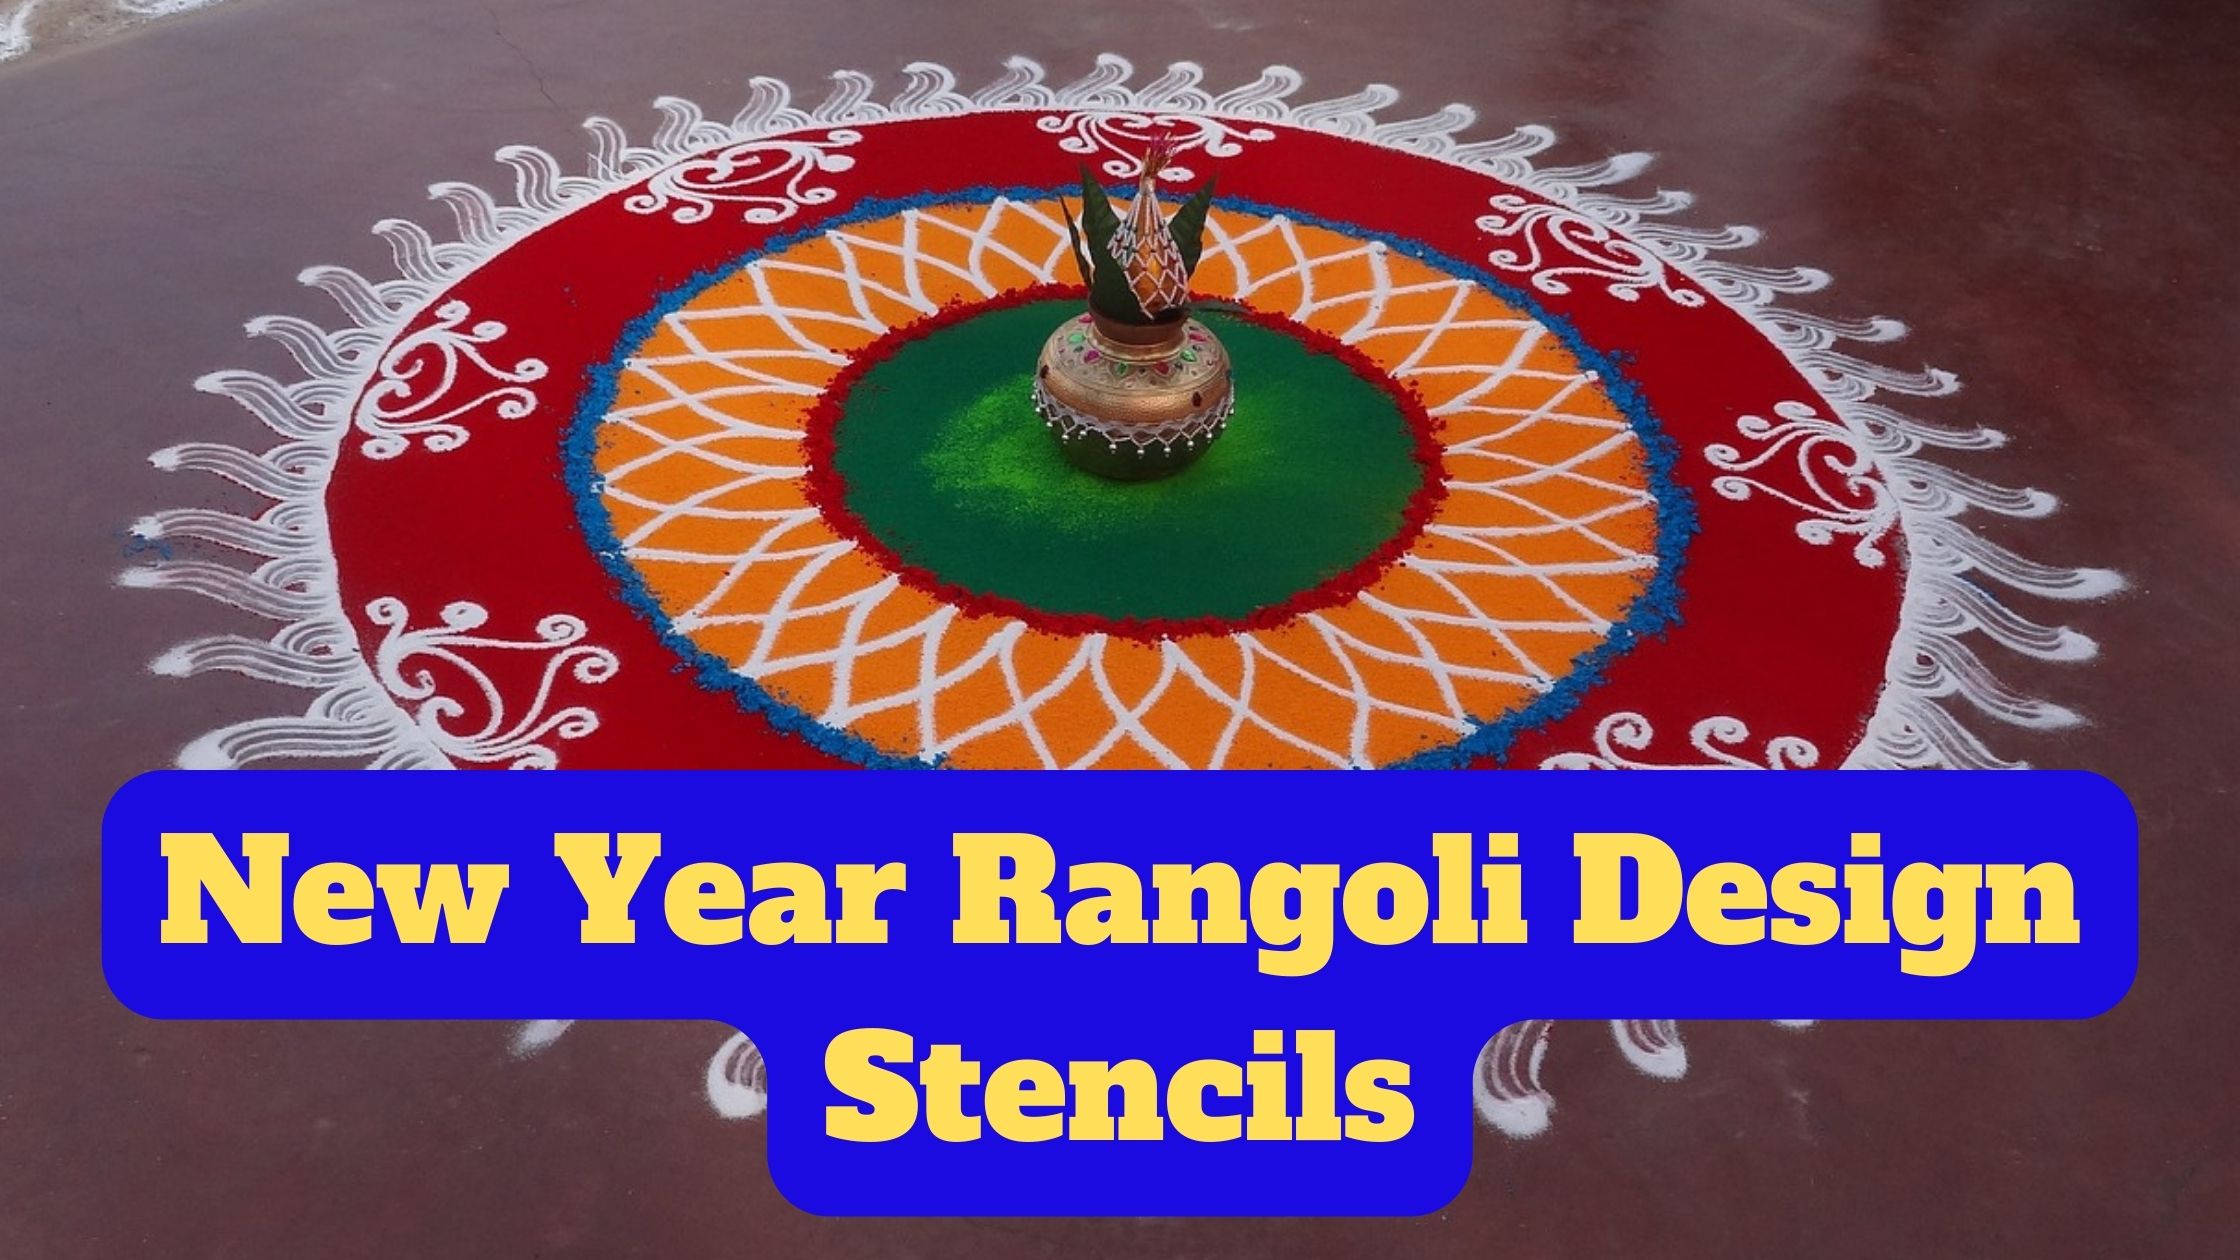 New Year Rangoli Design Stencils